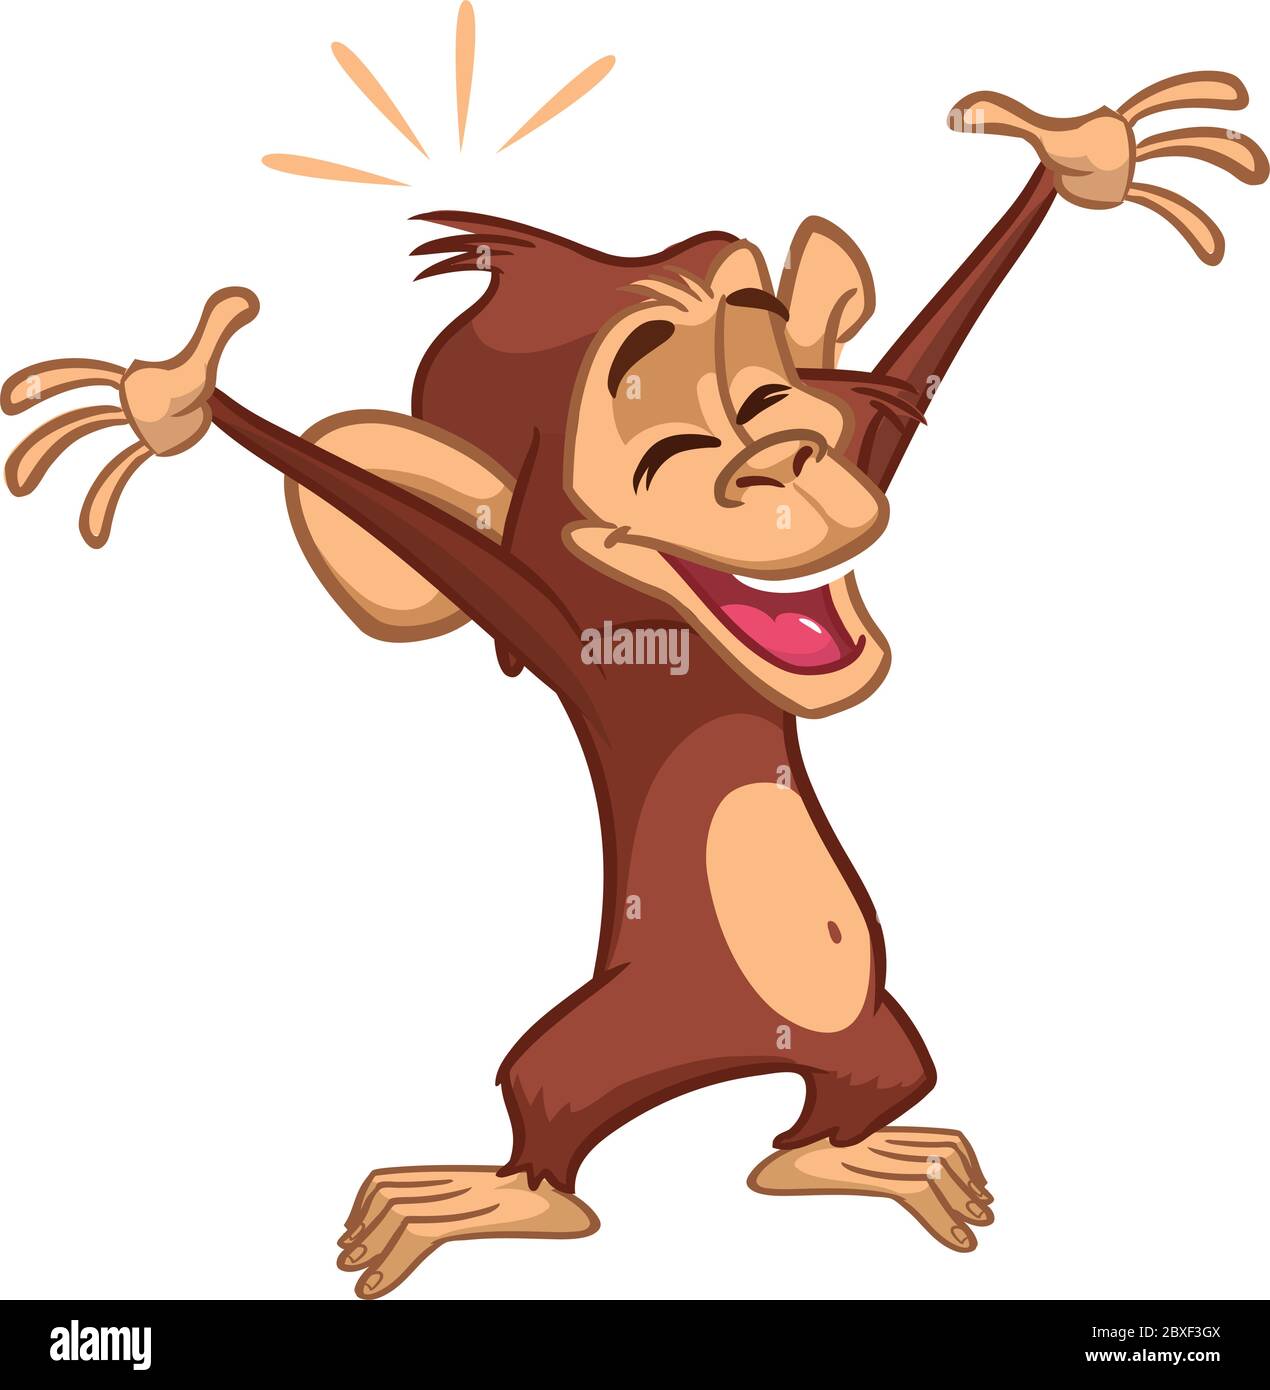 Cartoon monkey chimpanzee. Vector illustration of happy monkey character  Stock Vector Image & Art - Alamy